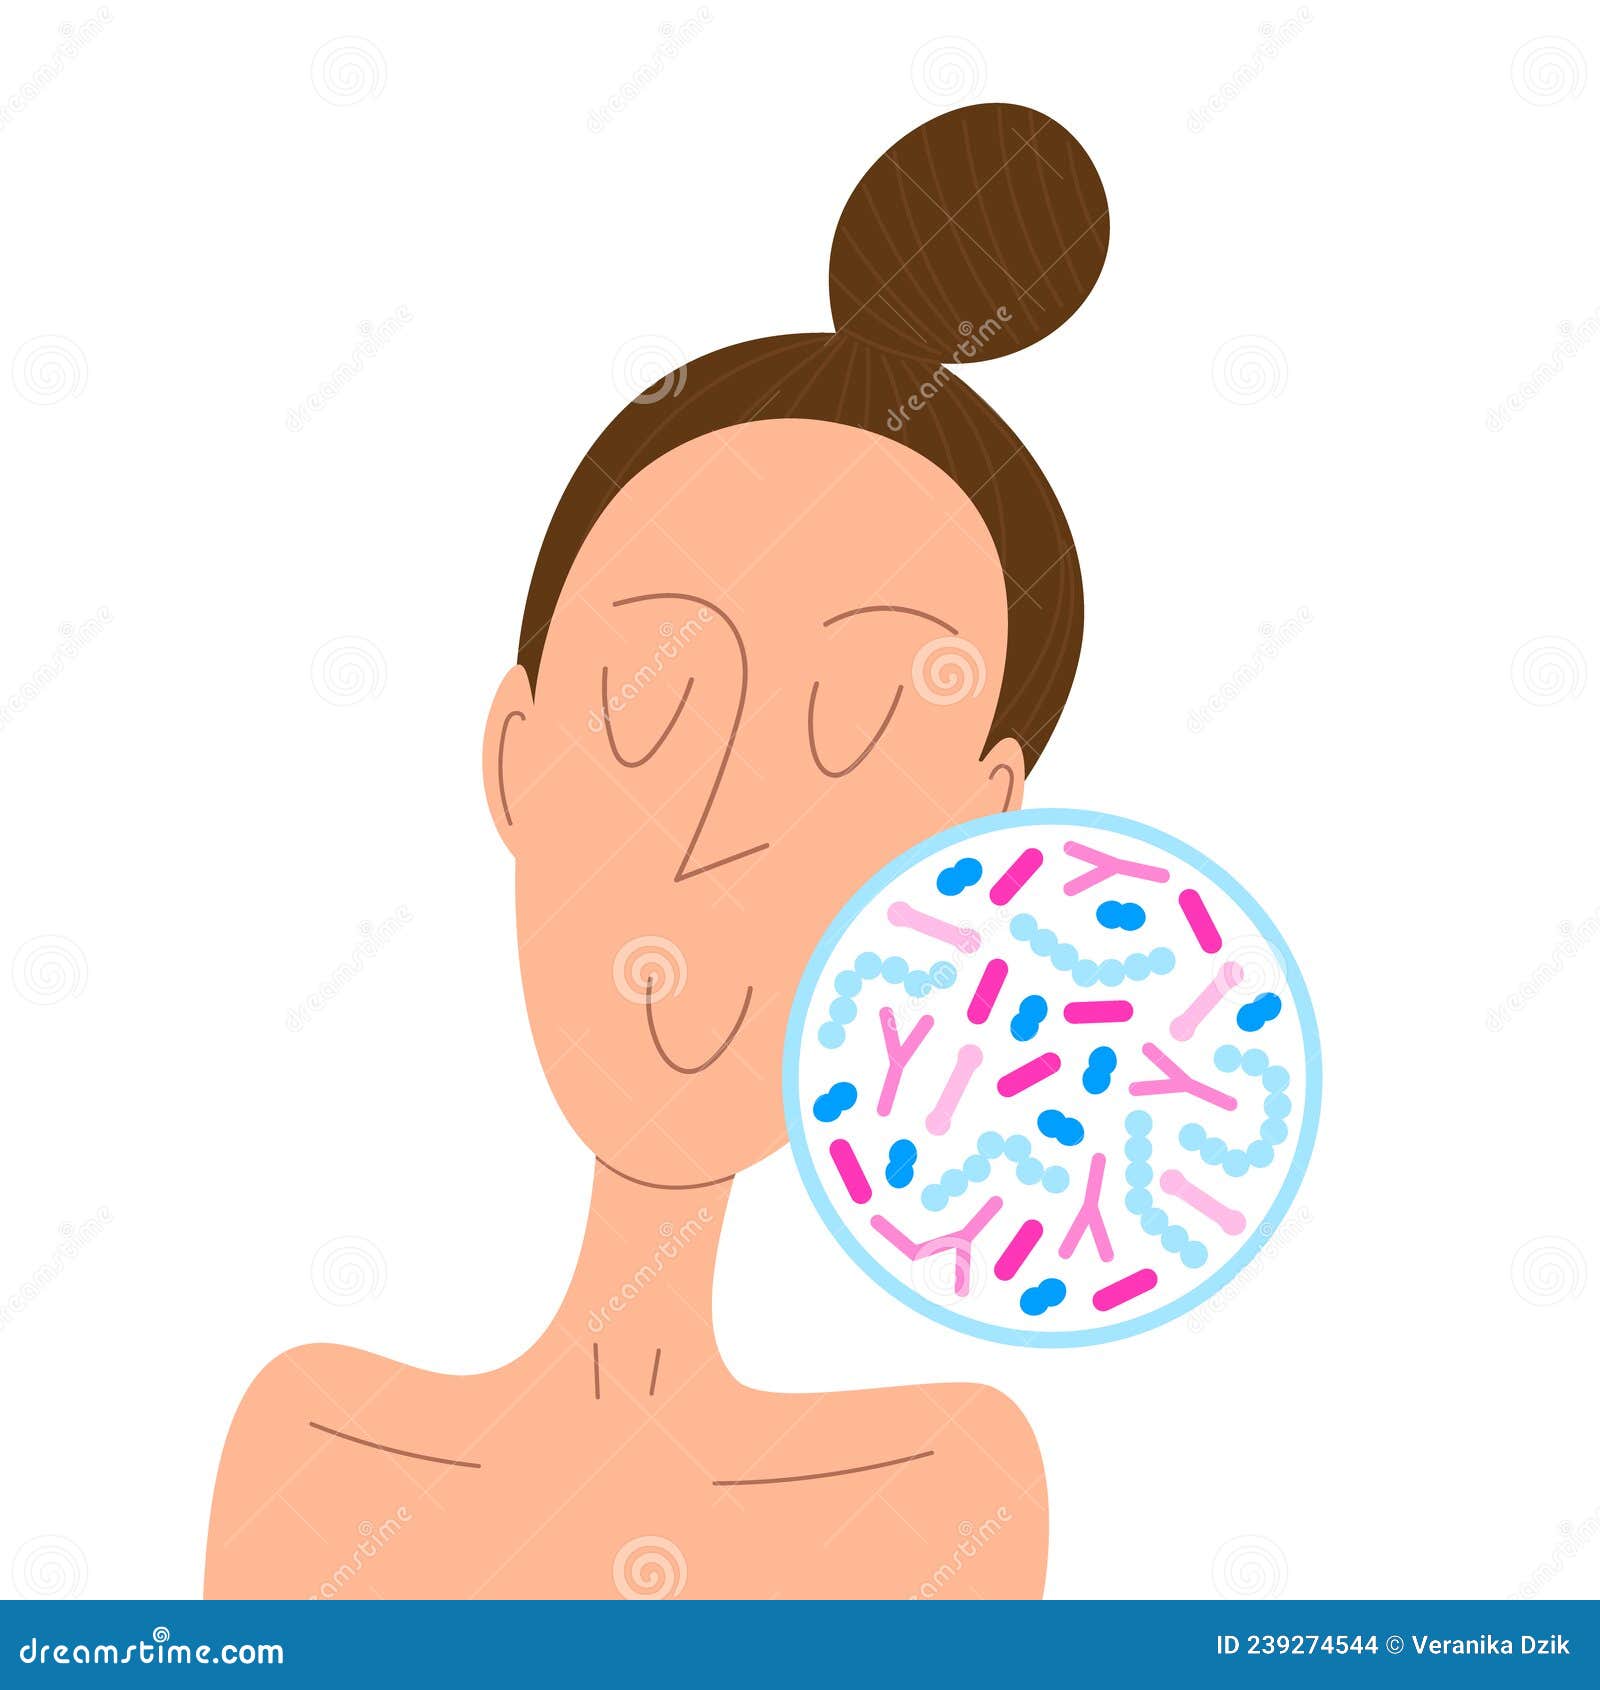 Skin Microbiota Cartoon